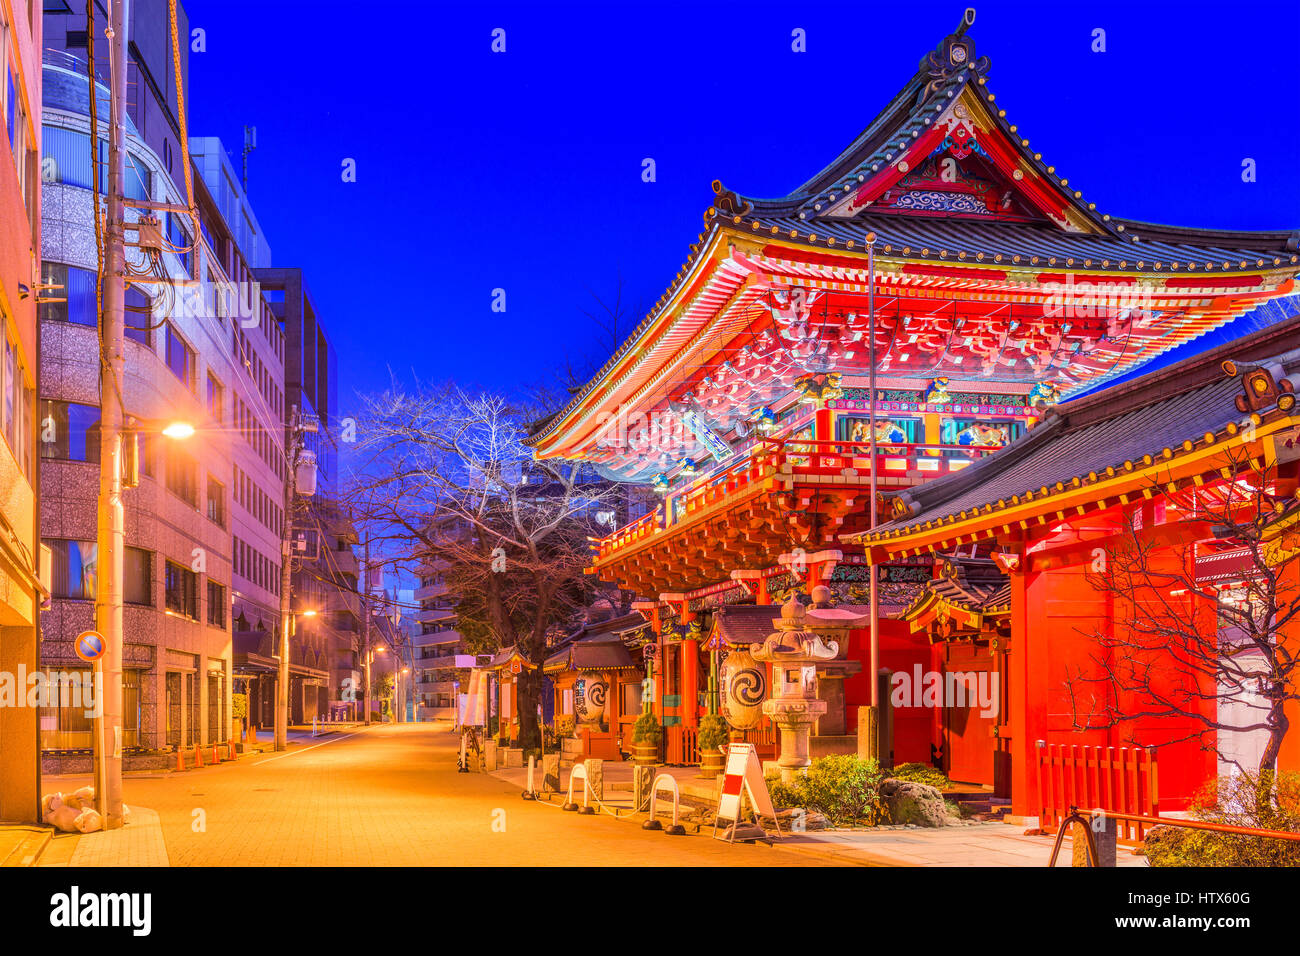 Tokyo, Japan at Kanda Shrine's main gate. (text on gate and lanterns all read 'Kanda Shrine') Stock Photo